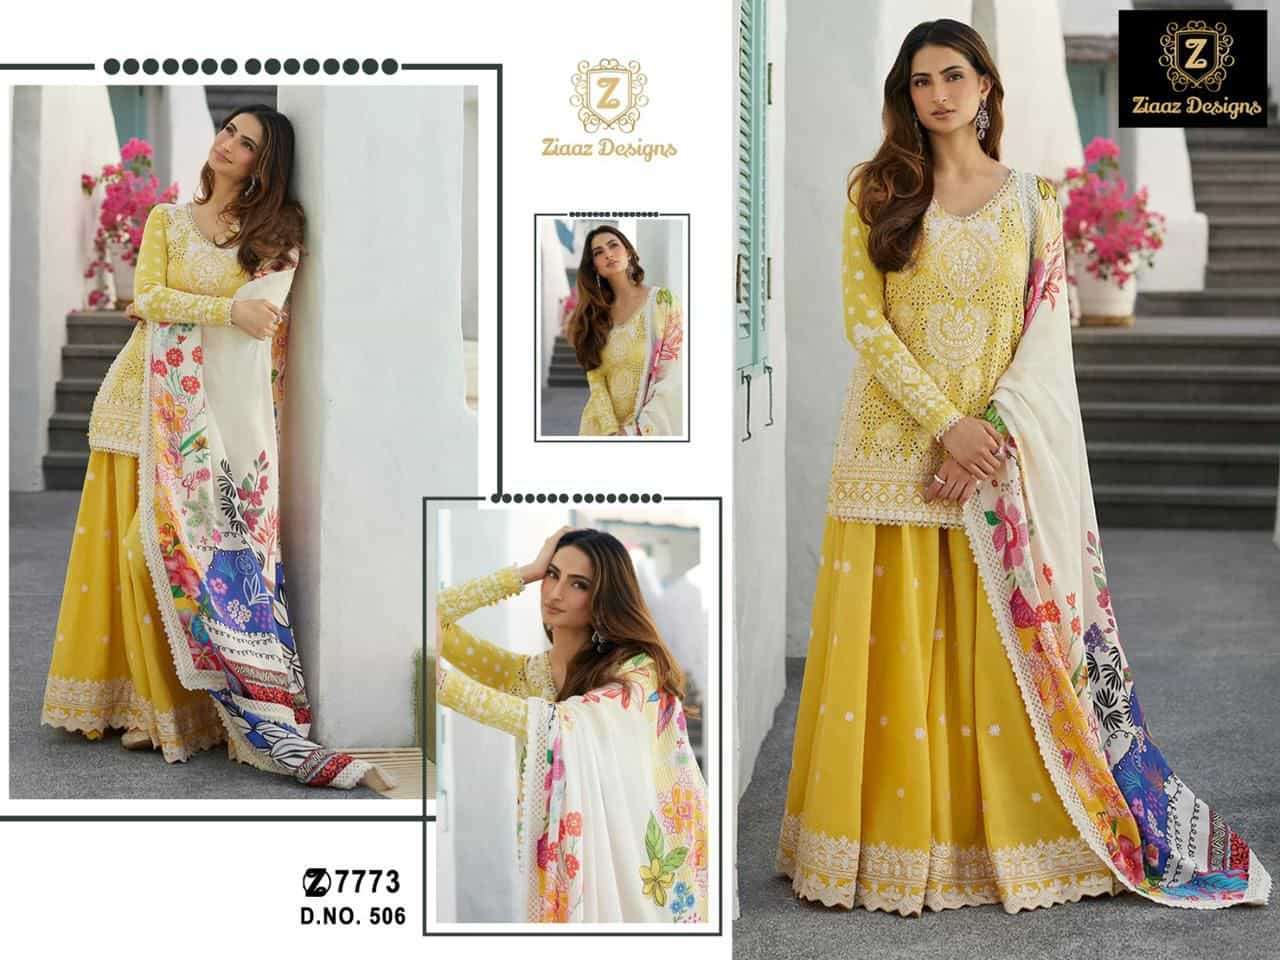 Ziaaz Designs 506 Fancy Designer Style Cotton Embroidered Salwar Suit Collection